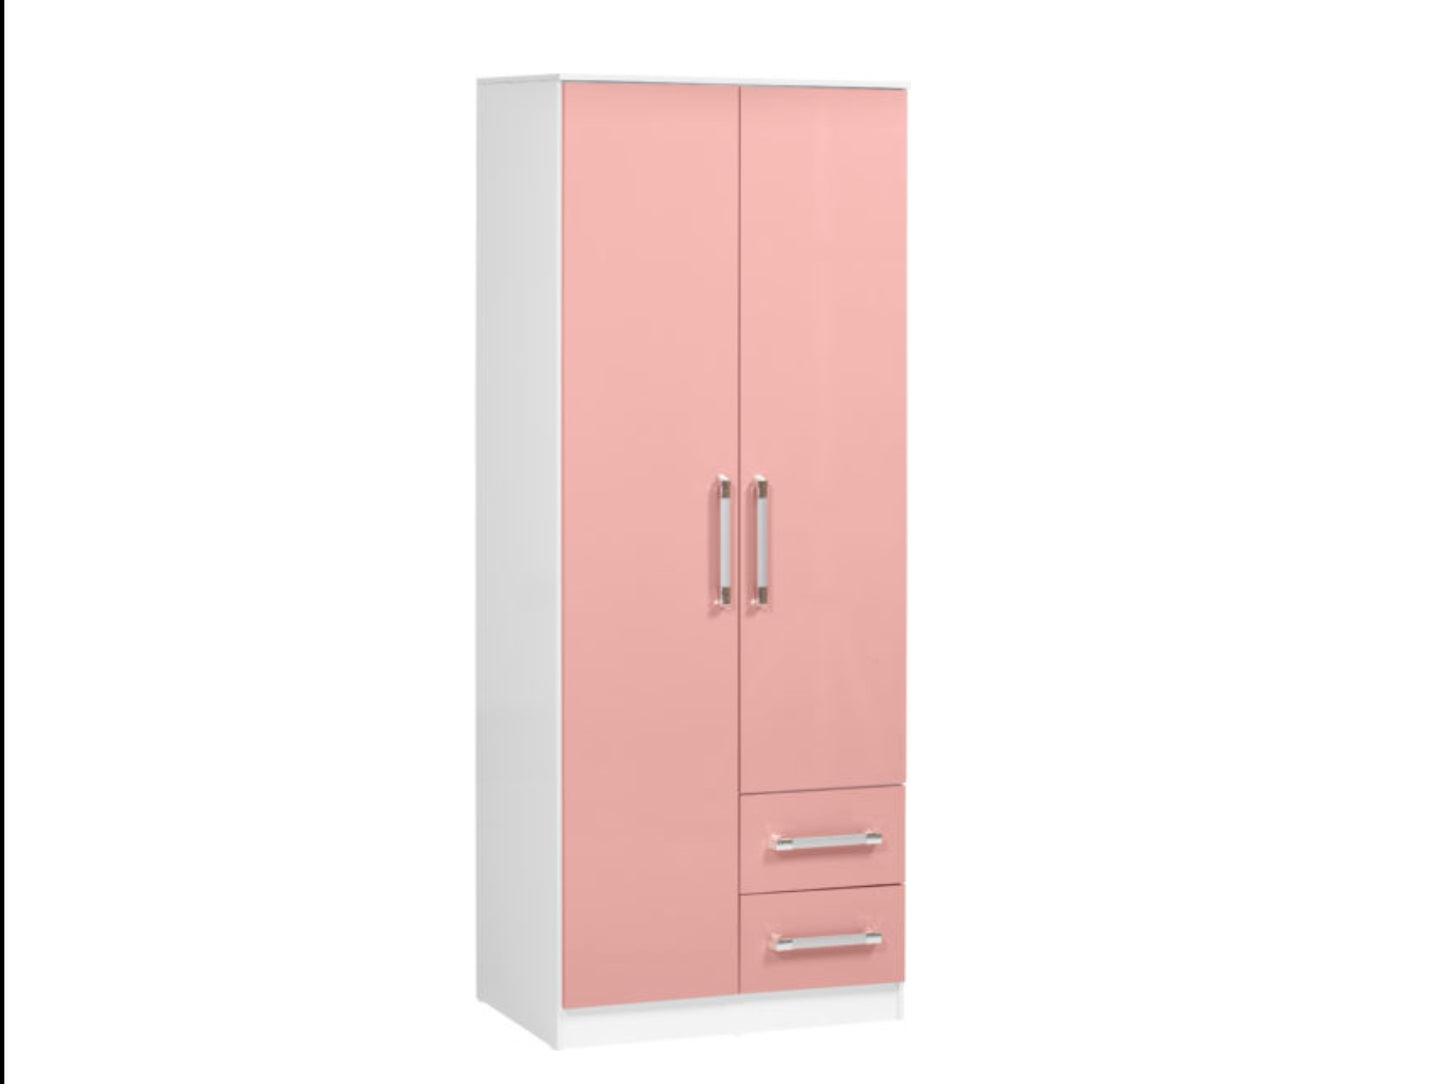 Jaspa Bedroom Set in Pink